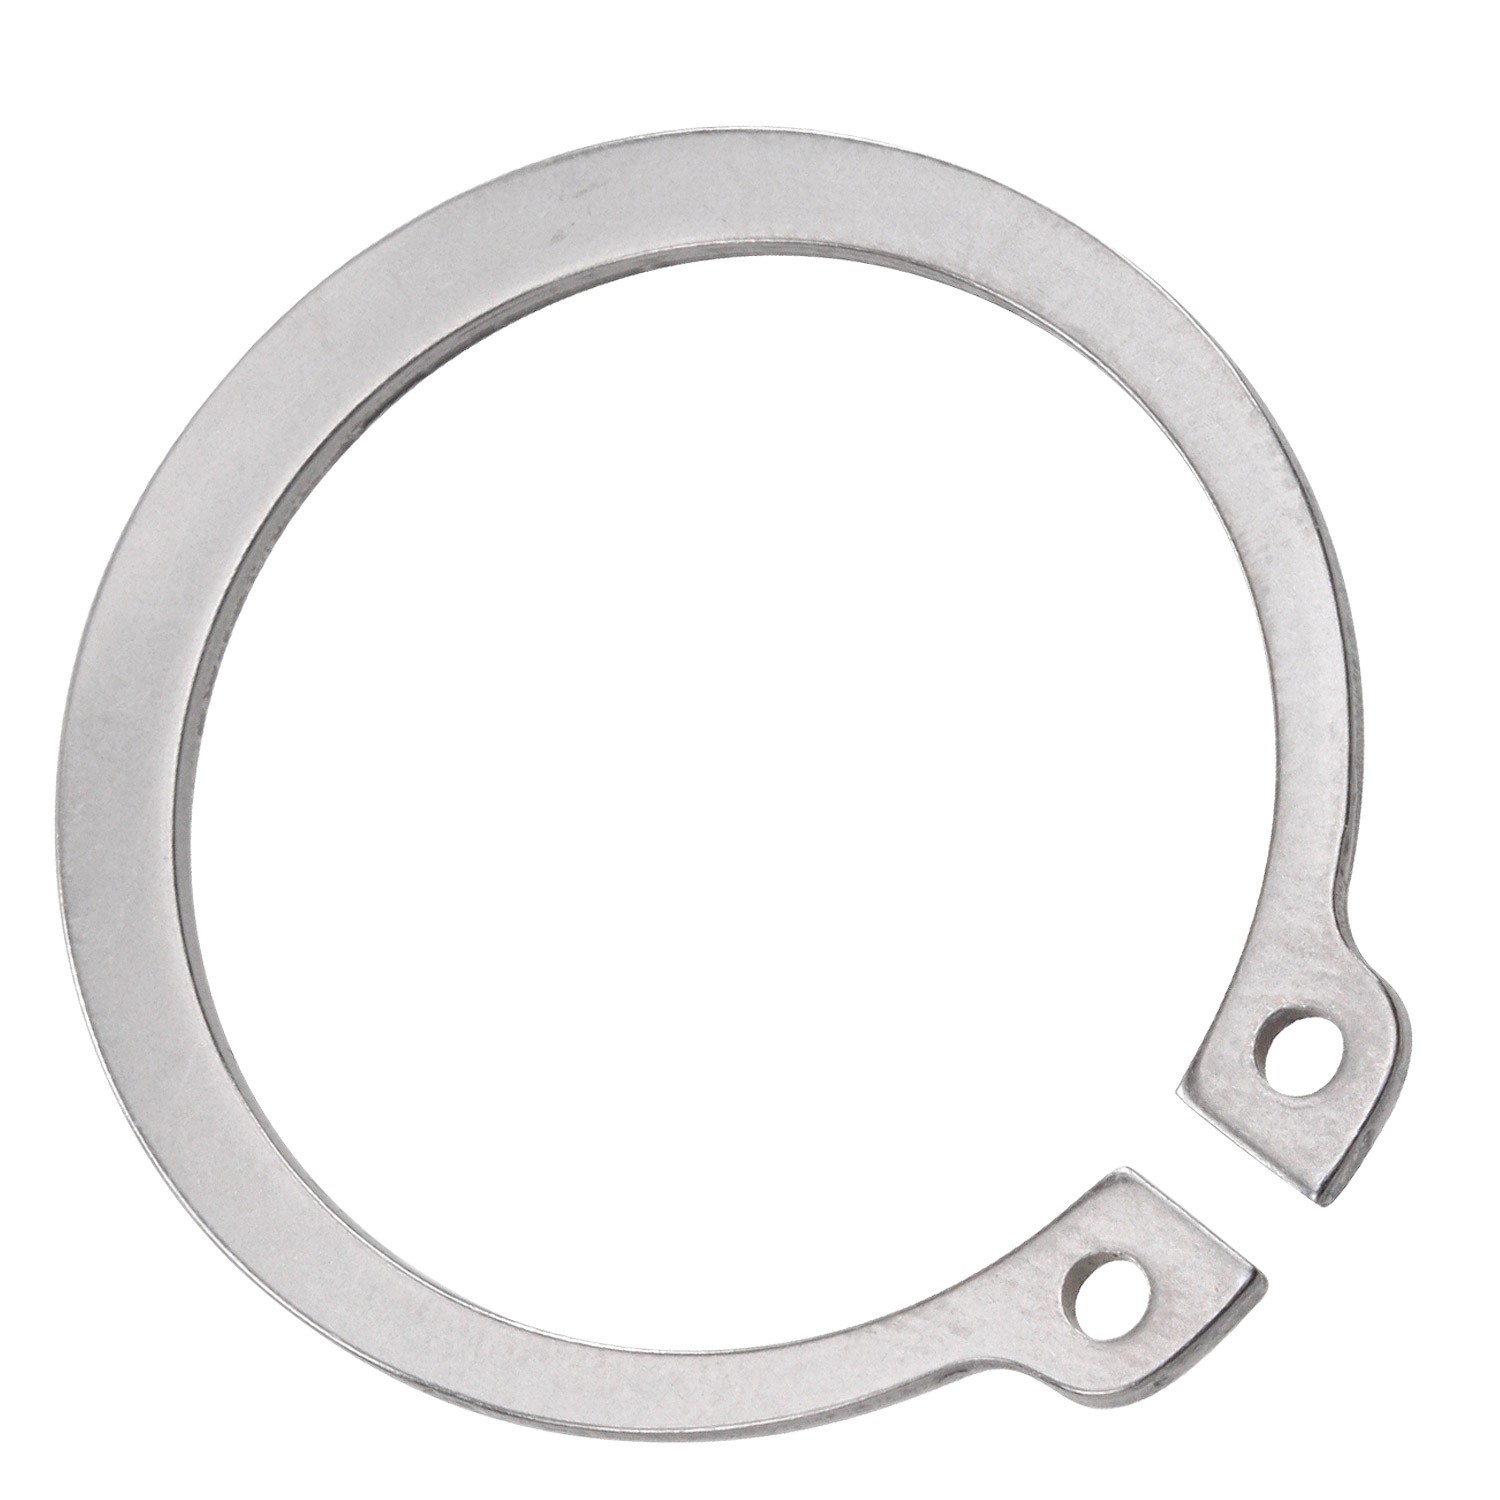 Кольцо стопорное наружное 20х1,2 DIN 471, нержавеющая сталь 1.4122 (А2) - фото